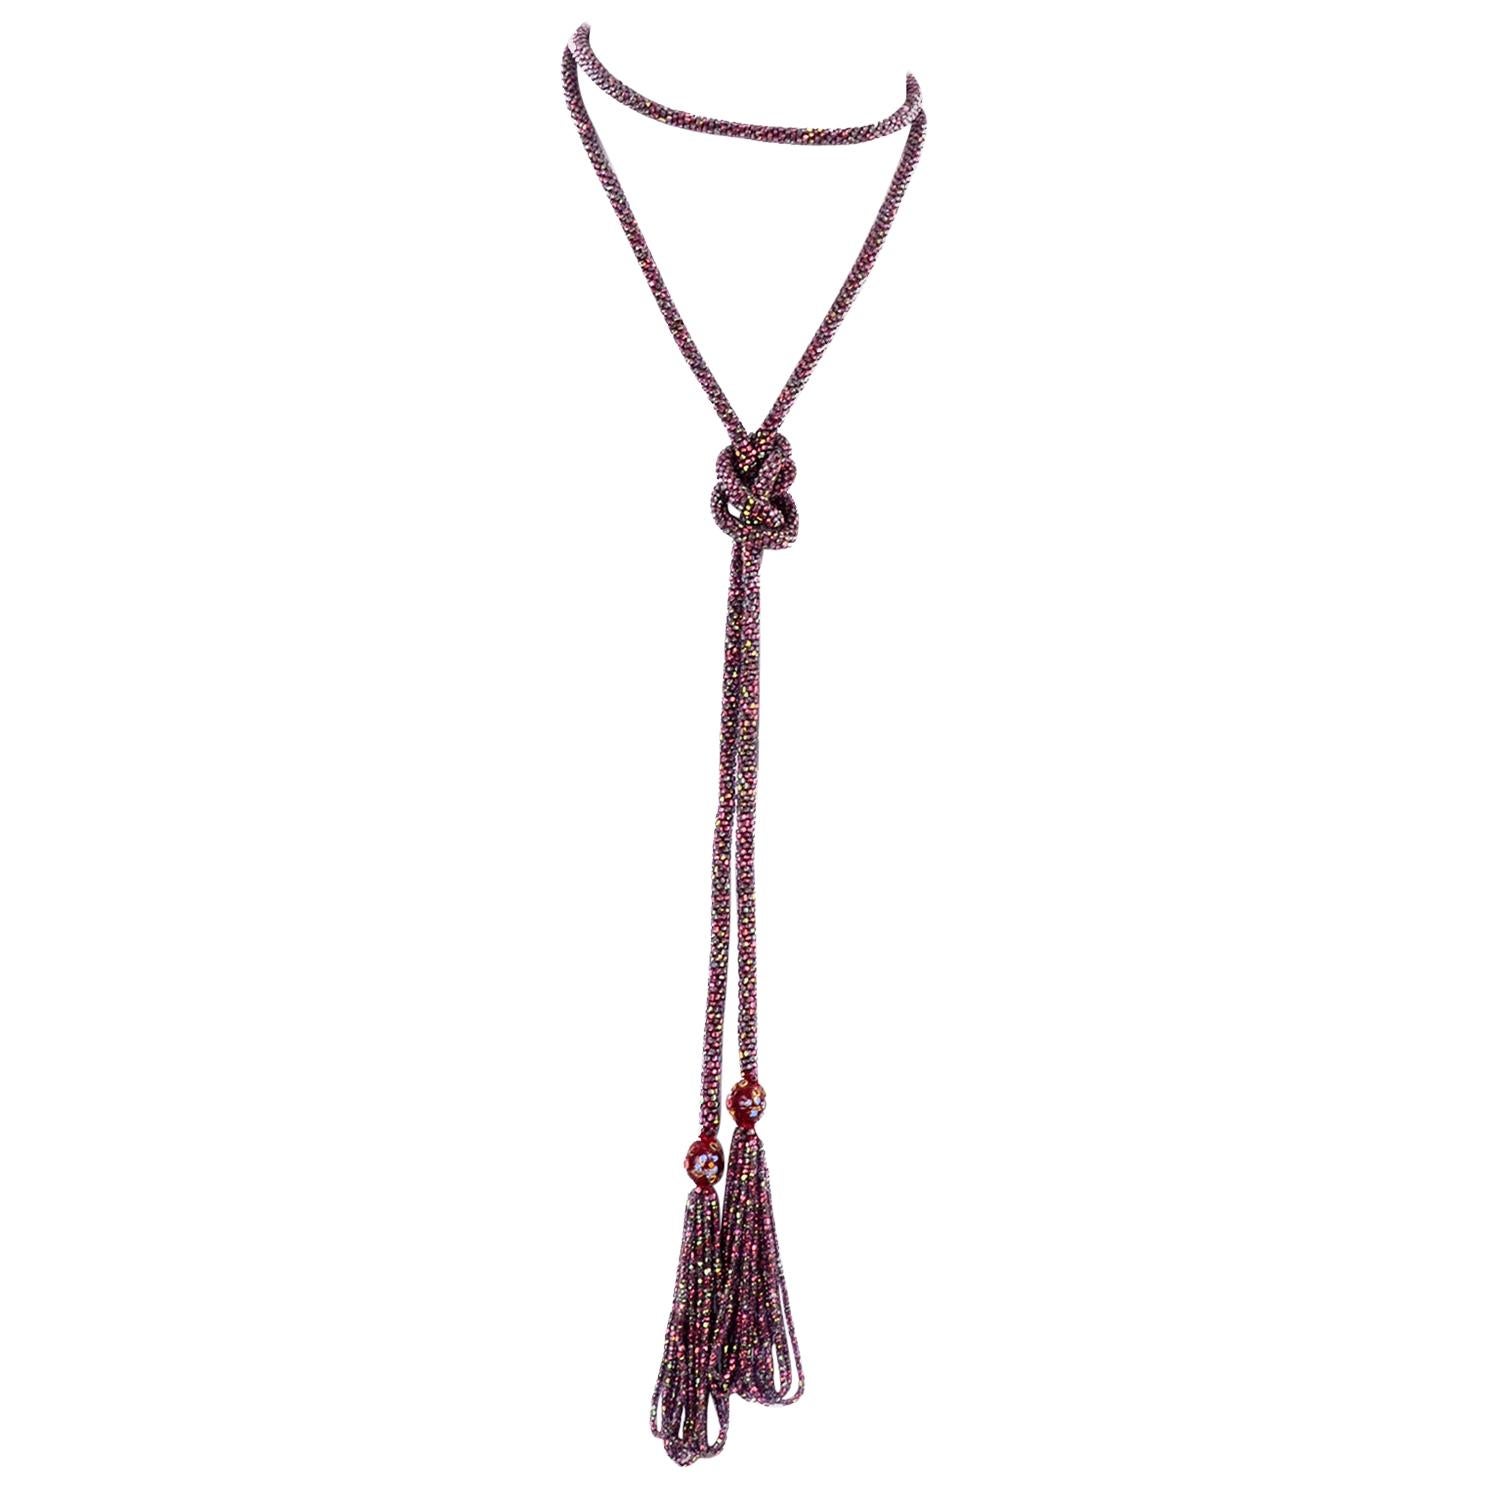 Vintage 1920s Sautoir Beaded Tassel Flapper Necklace W Lampwork Beads & Fringe For Sale